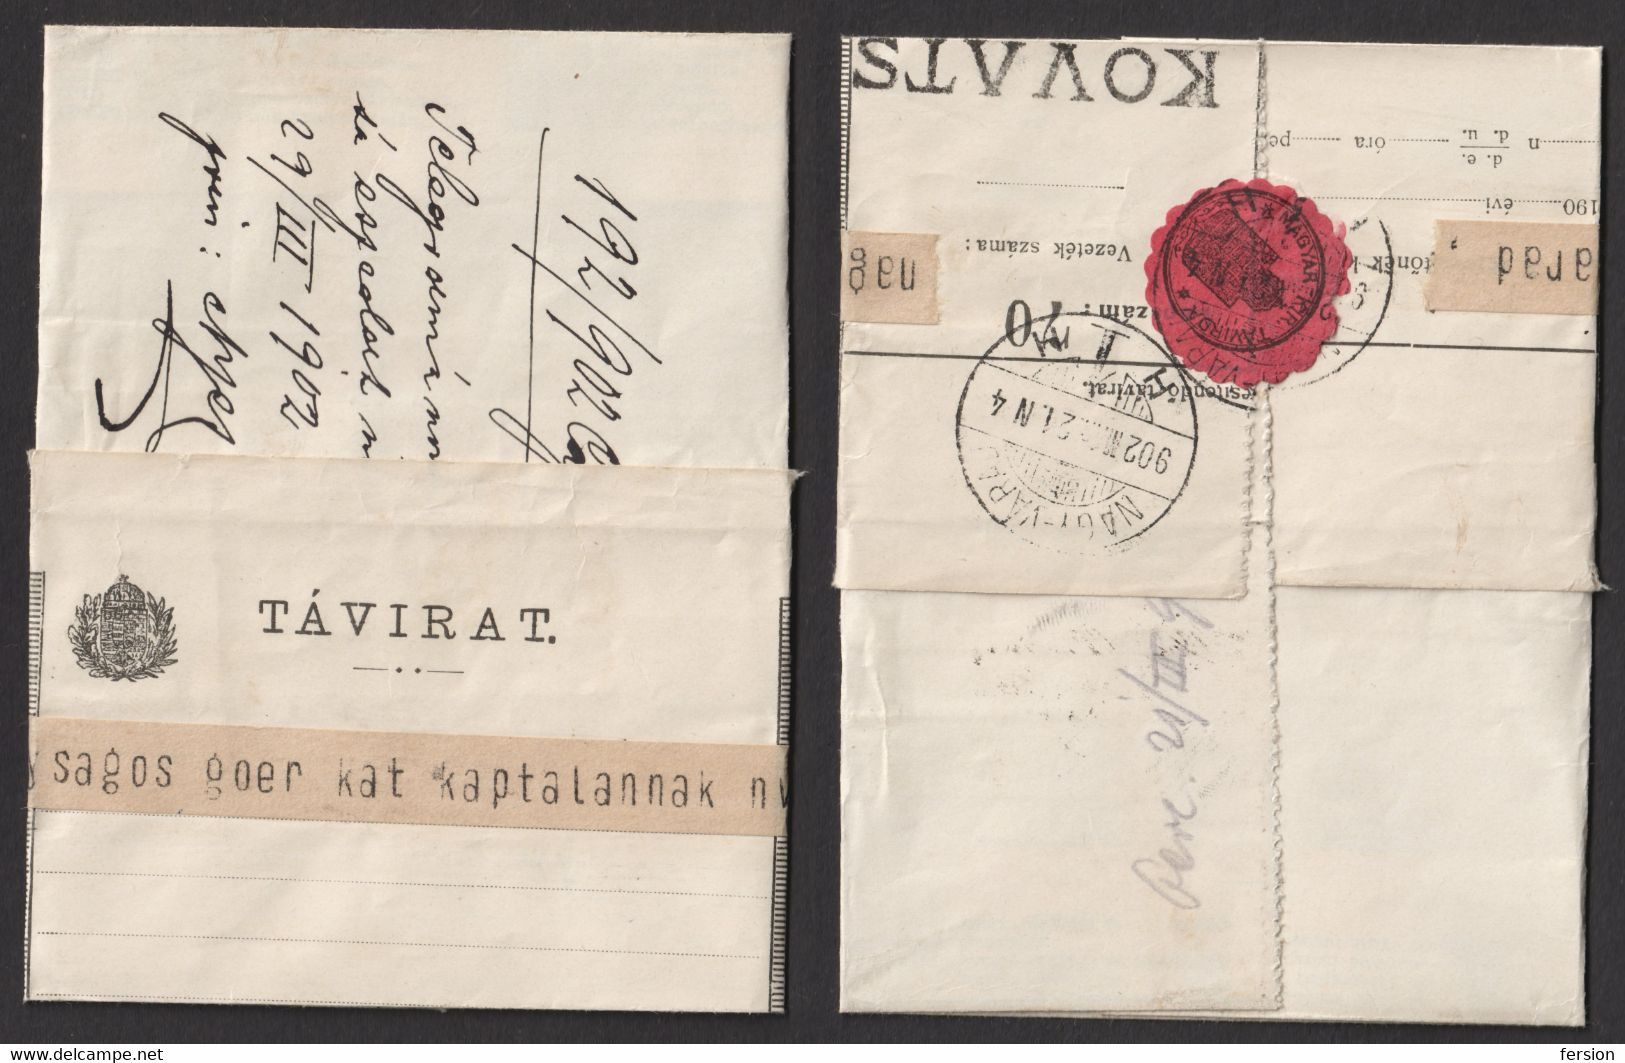 TELEGRAPH TELEGRAM 1902 Hungary Romania Transylvania - NAGYVÁRAD ORADEA - Close Label Vignette ORTHODOX PRIEST - Télégraphes